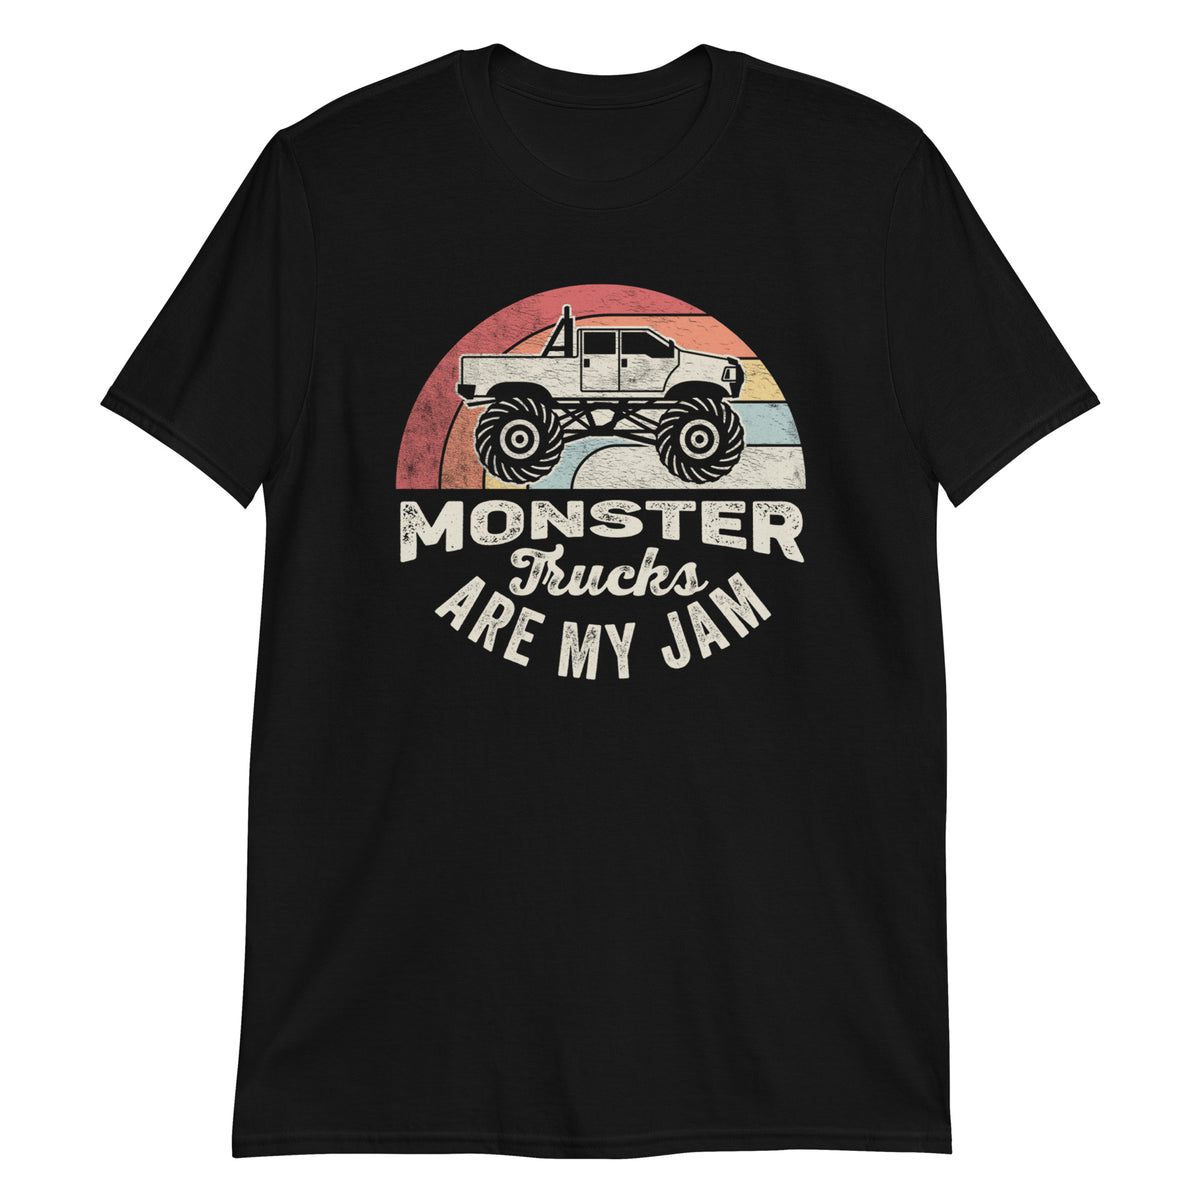 Monster Truck are My Jam T-Shirt